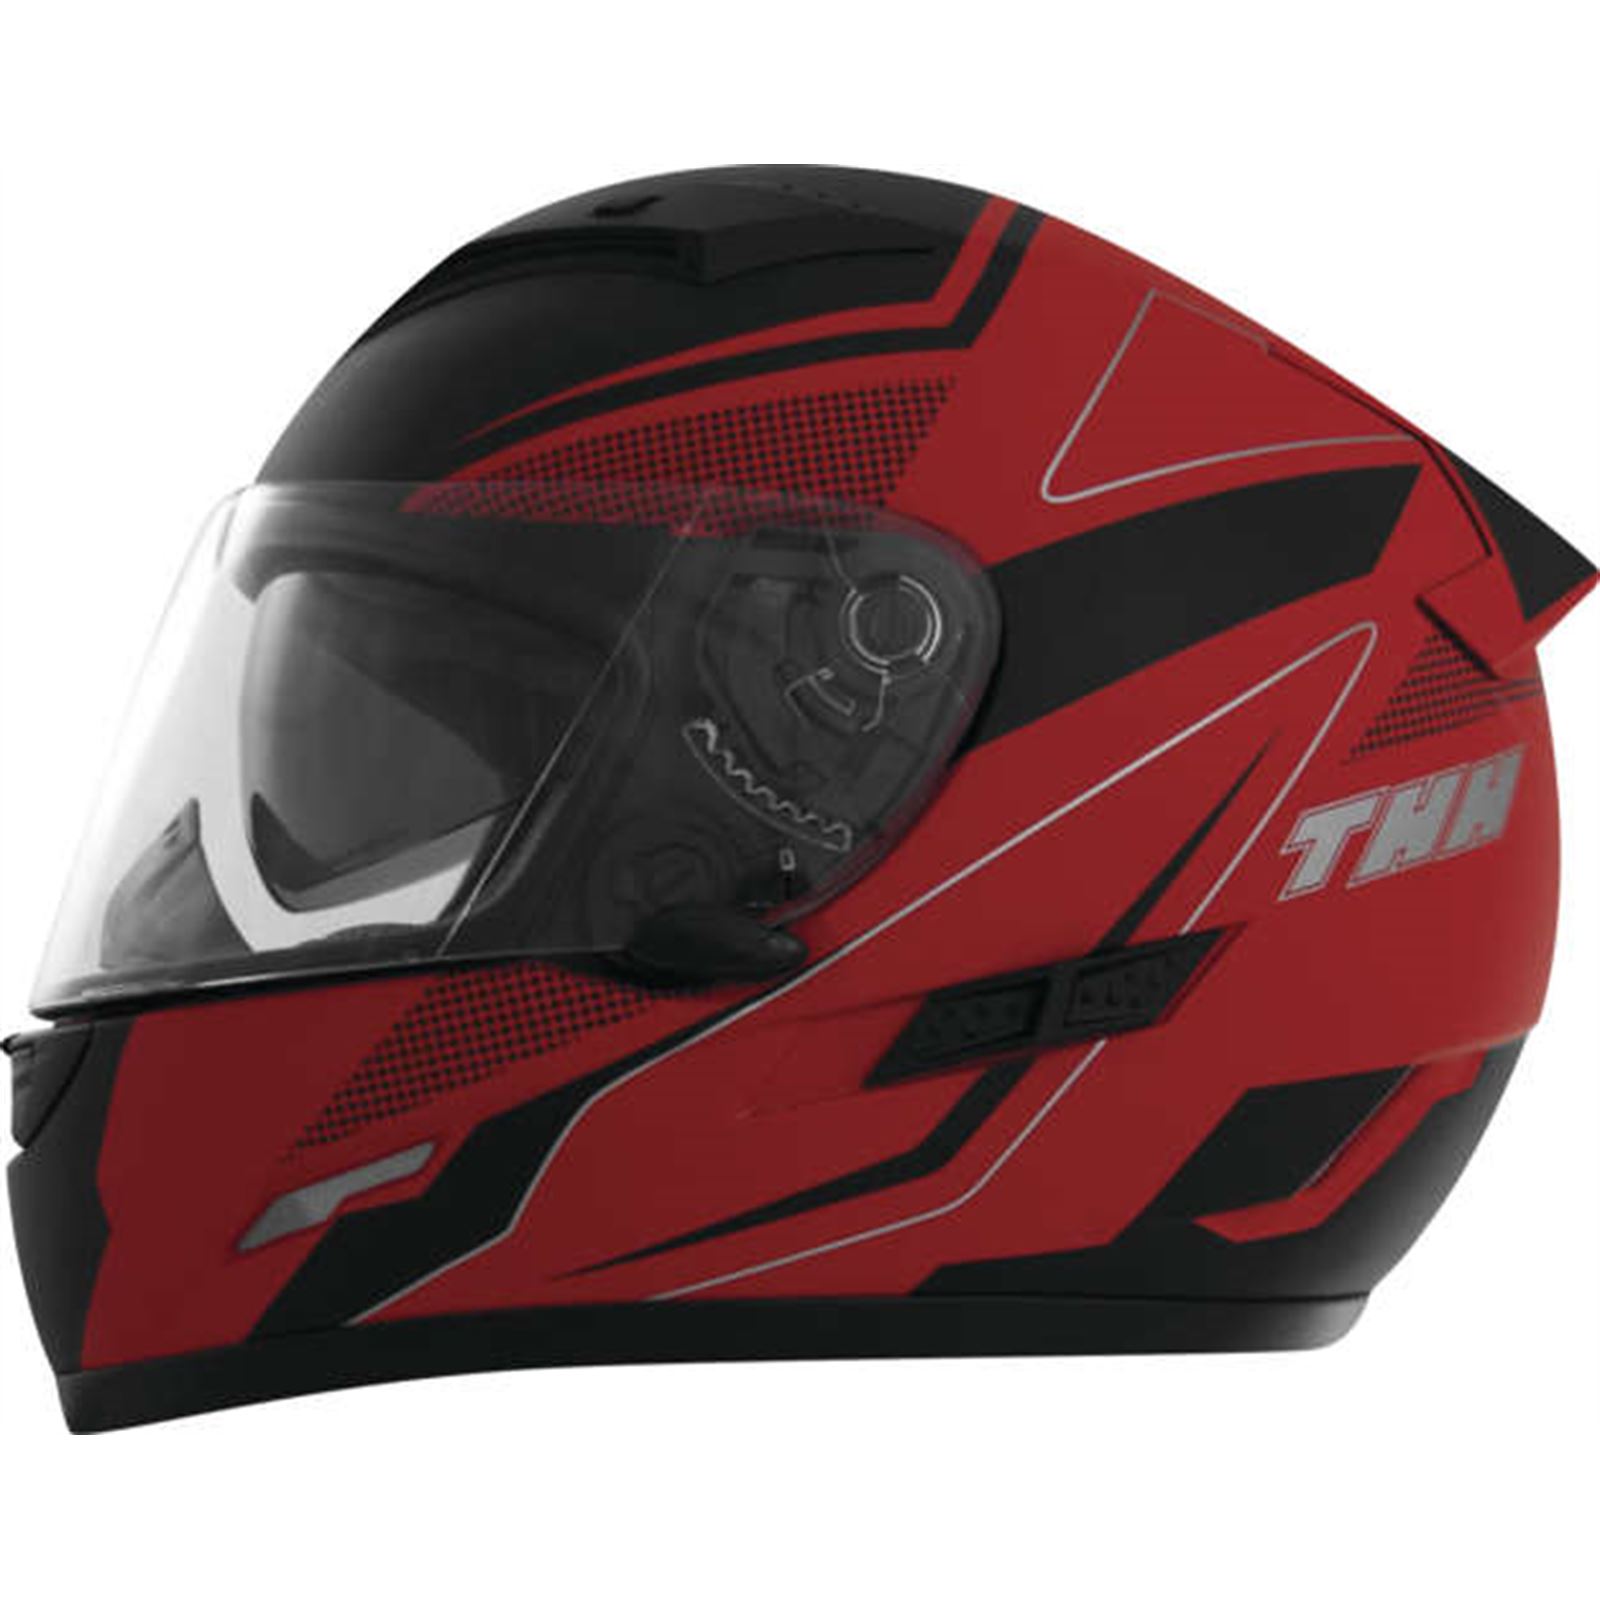 THH Helmets TS-80 Helmet FXX Red/Black - Large